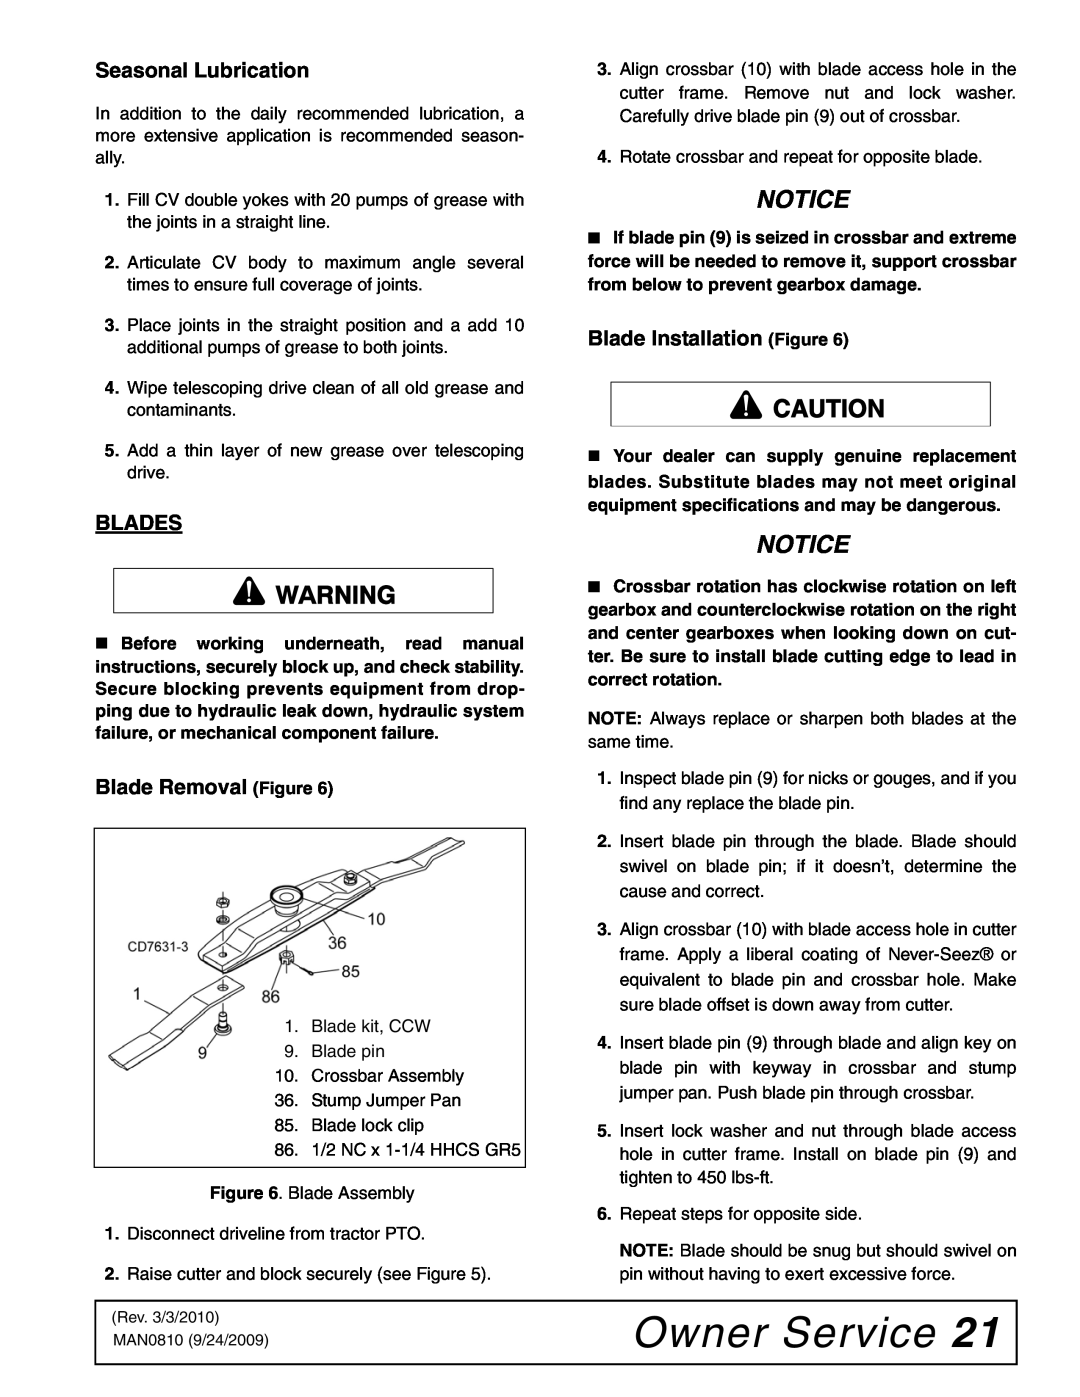 Woods Equipment BW15LH manual Owner Service, Notice, Seasonal Lubrication, Blades, Blade Installation Figure 